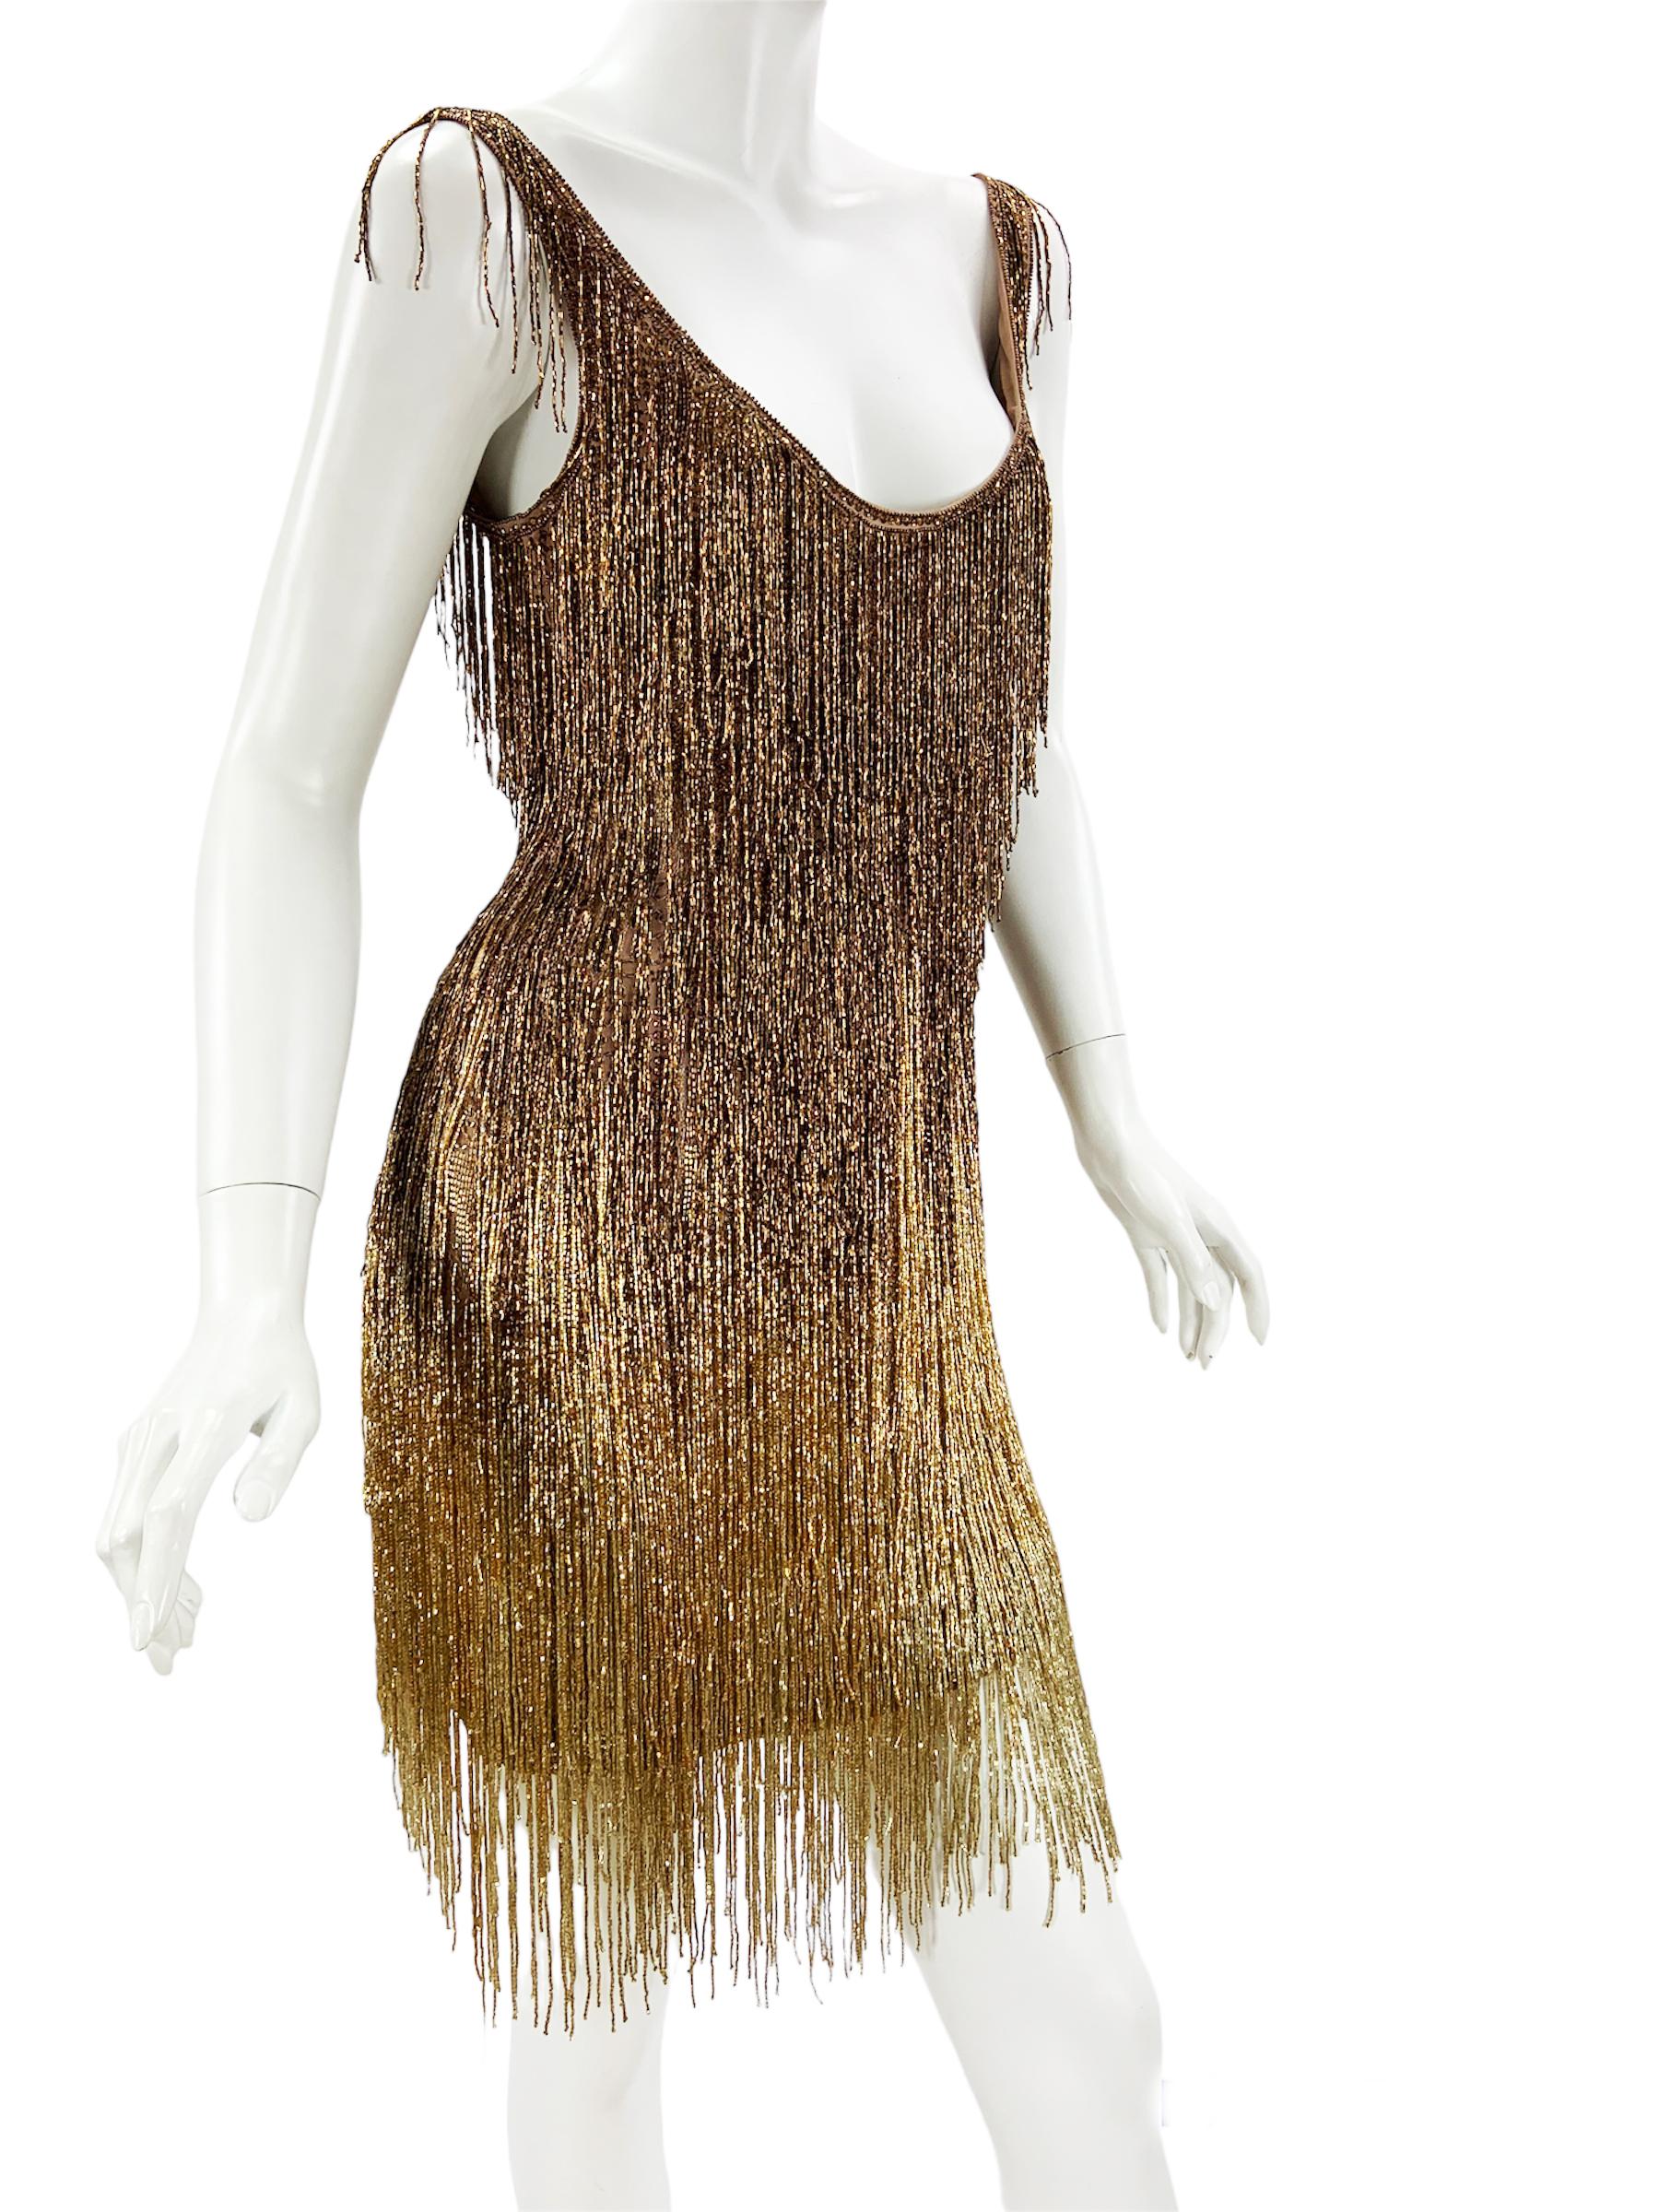 Iconic MUSEUM Roberto Cavalli Fringe Beaded Dress as seen on TAYLOR SWIFT It. 40 2